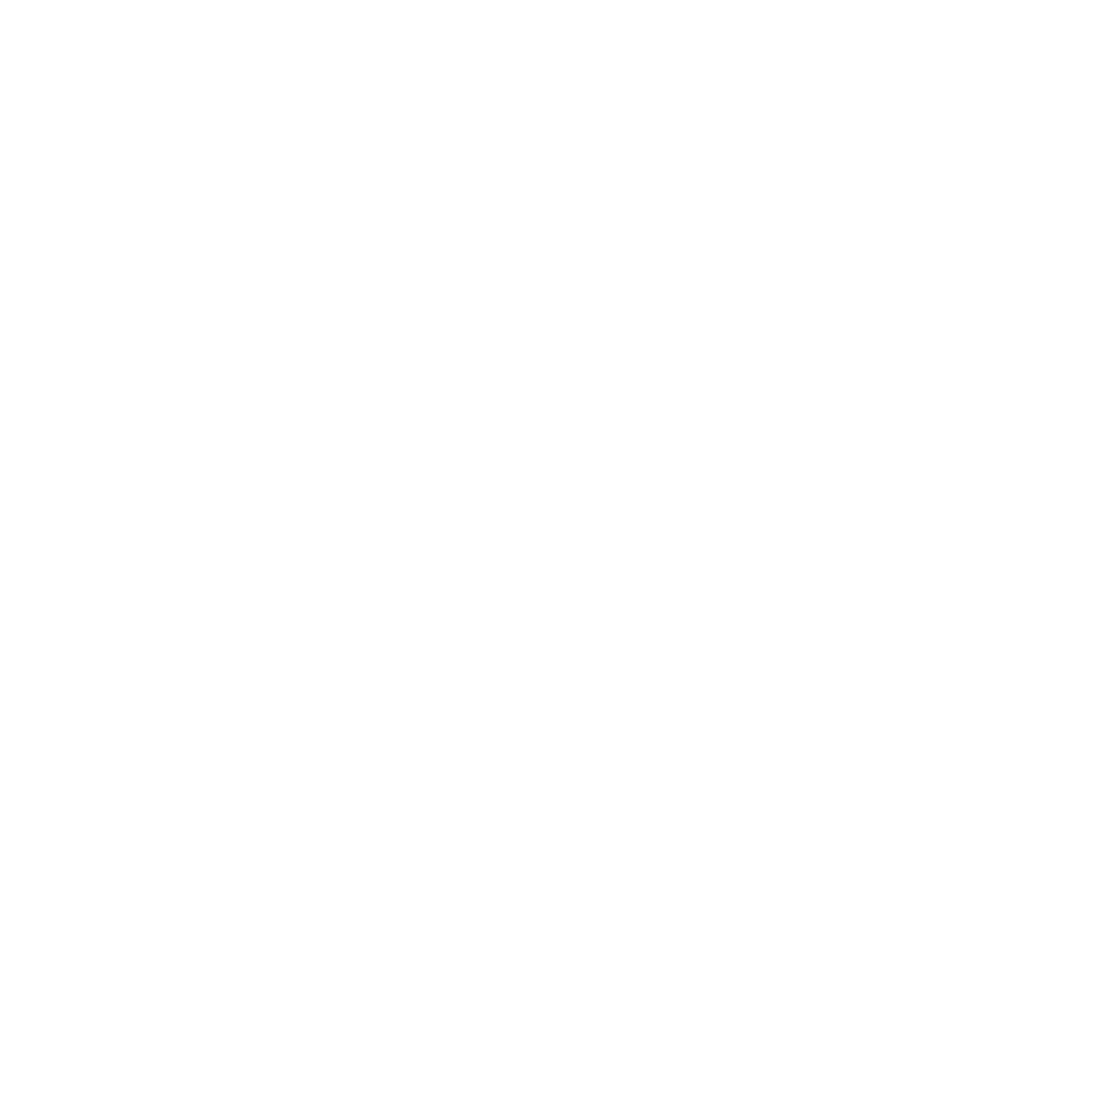 The Digital Left